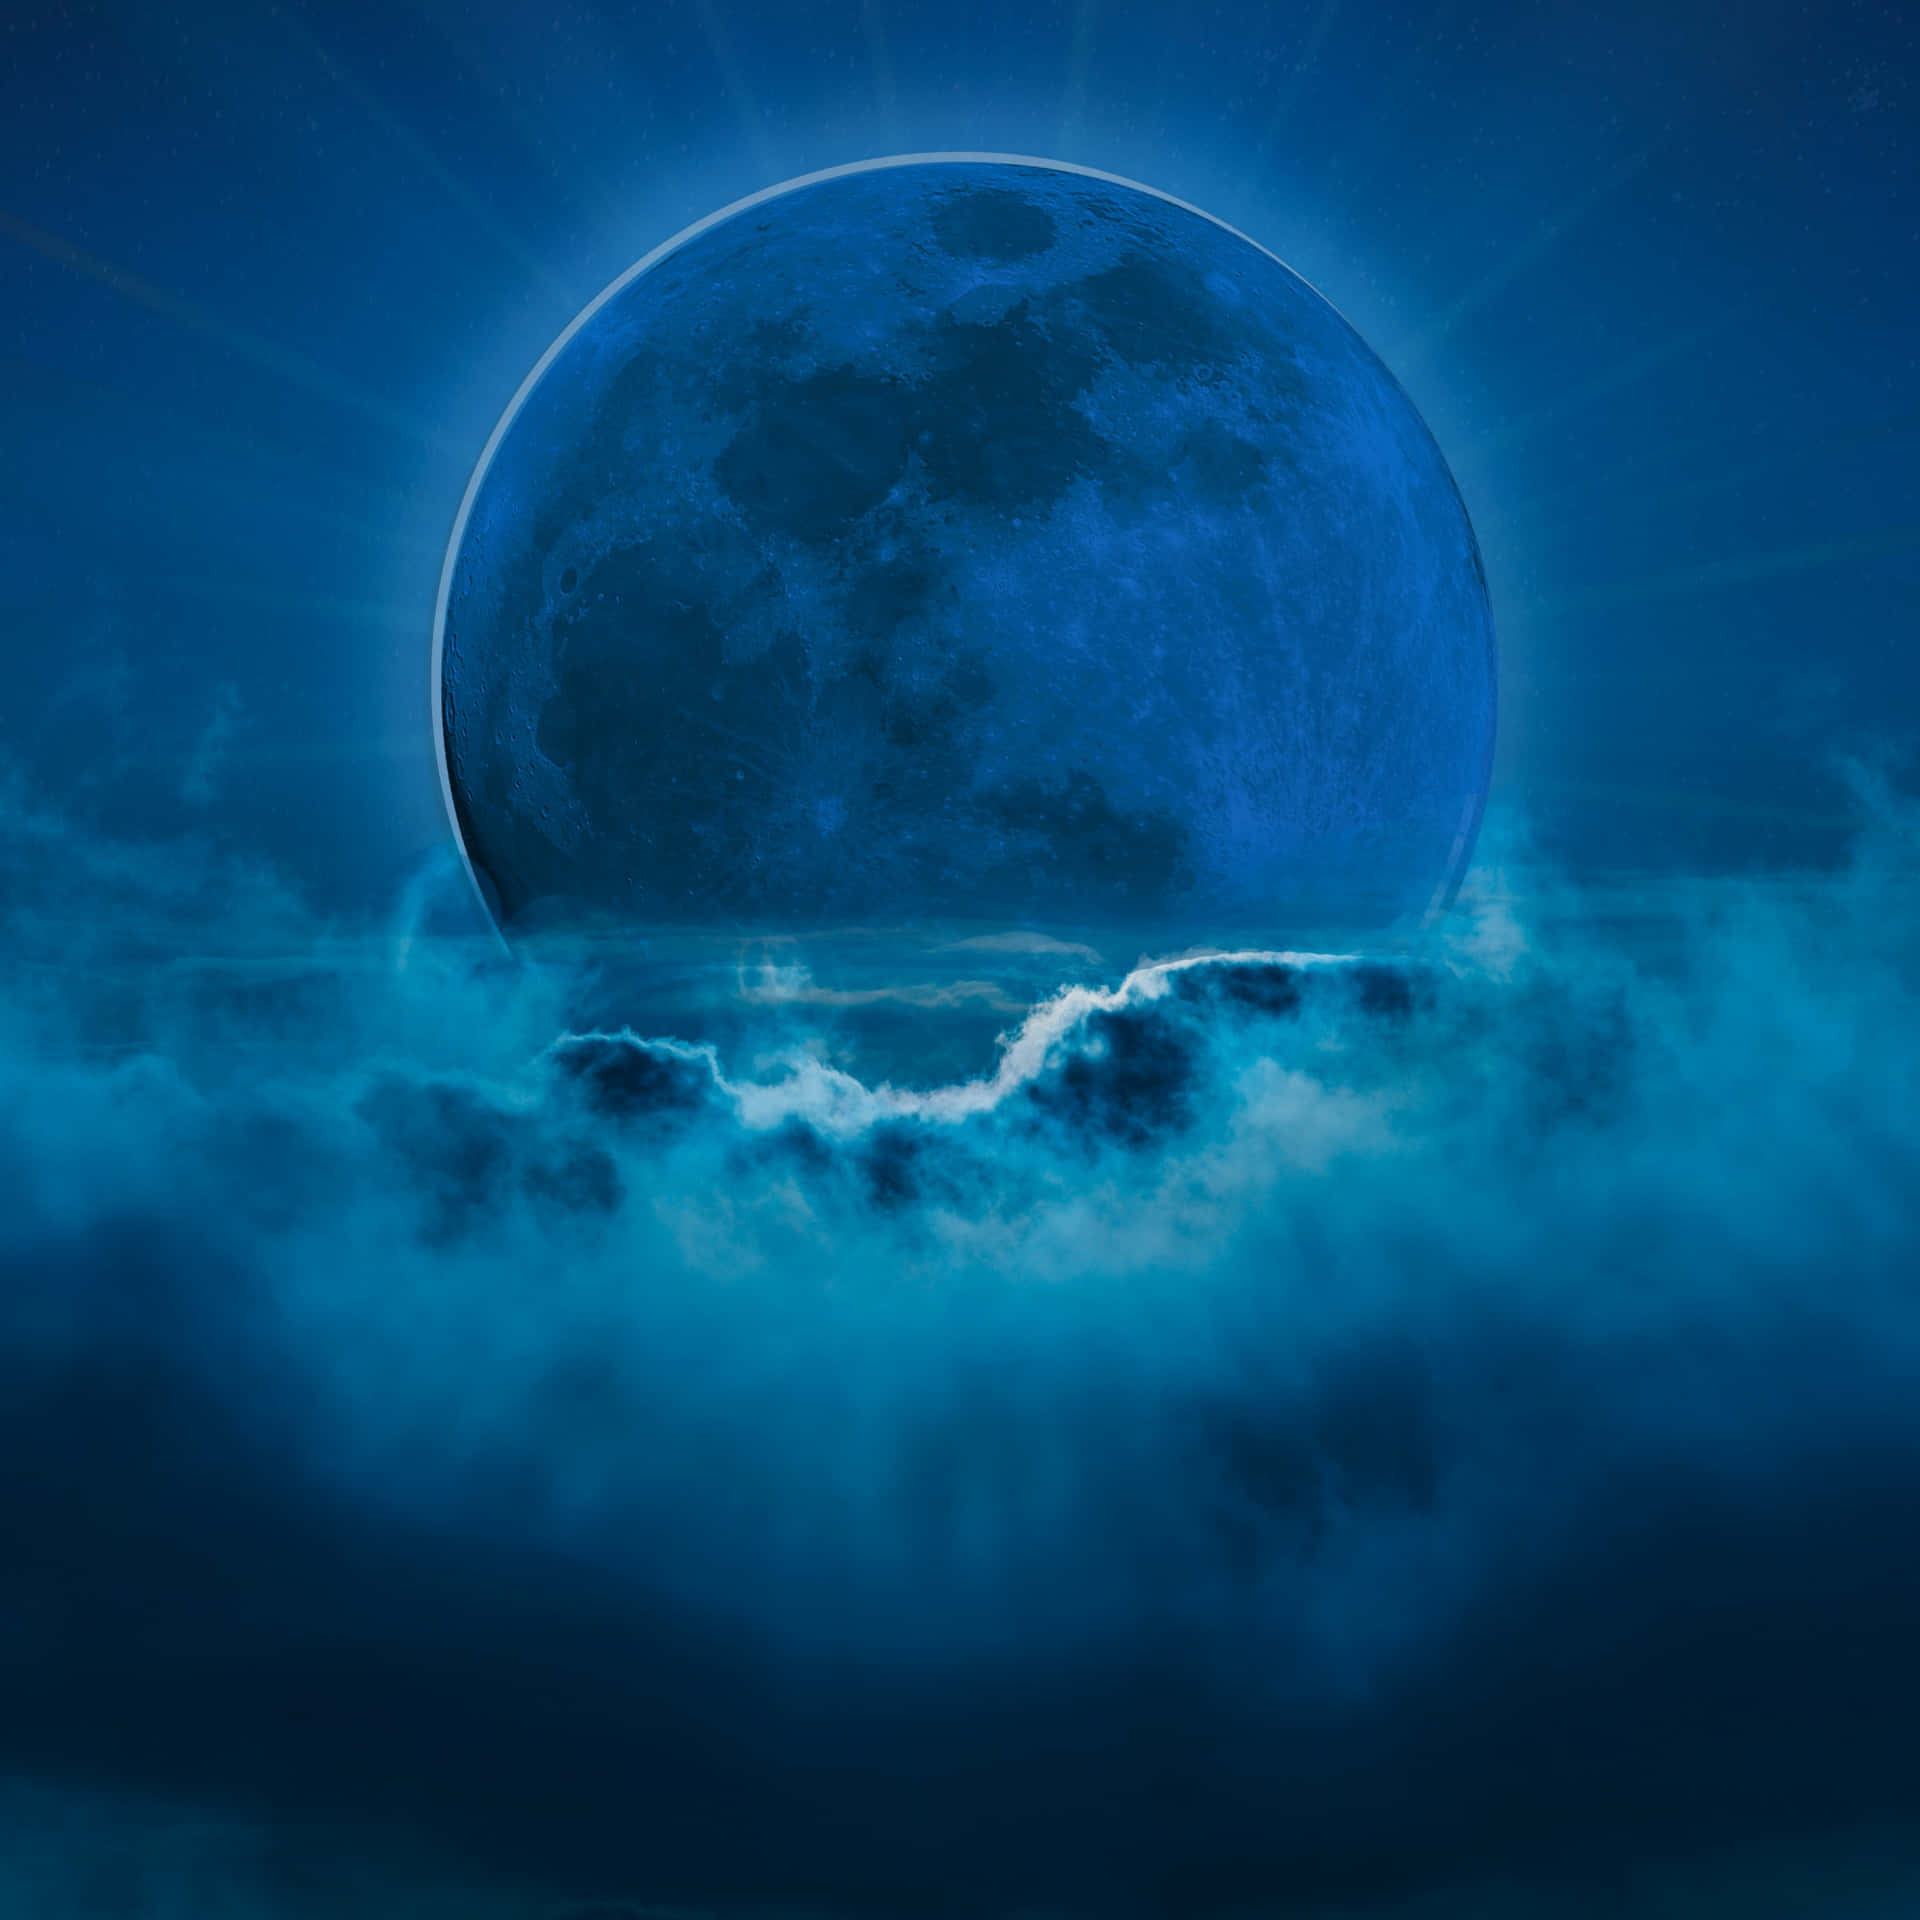 Mystical Blue Moon Illustration Wallpaper